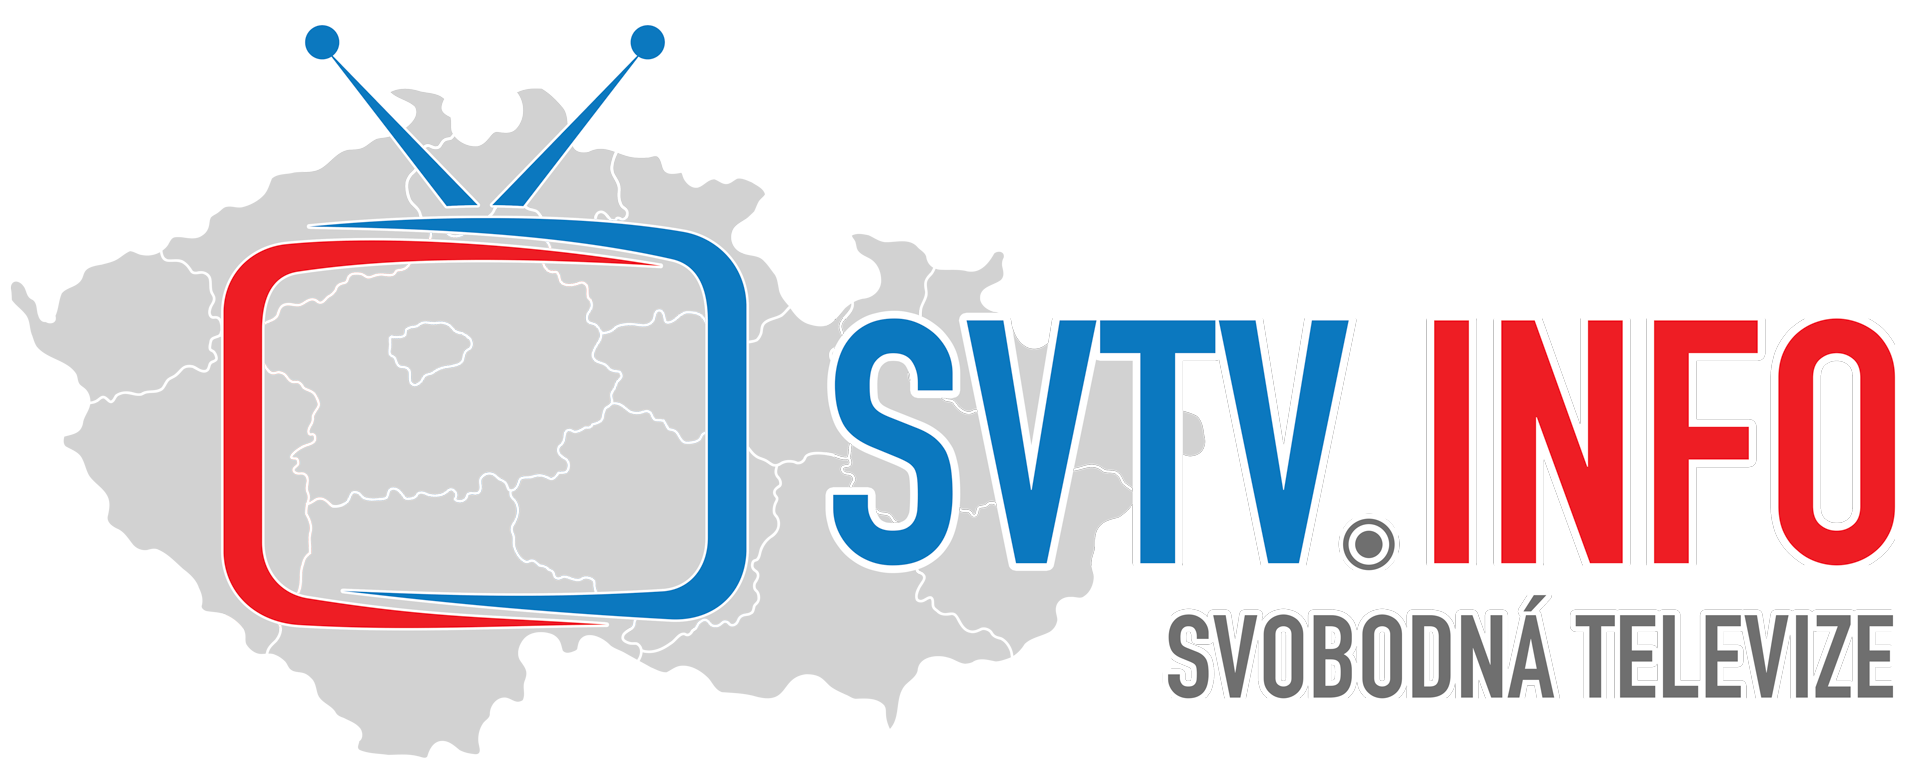 SVTV.INFO